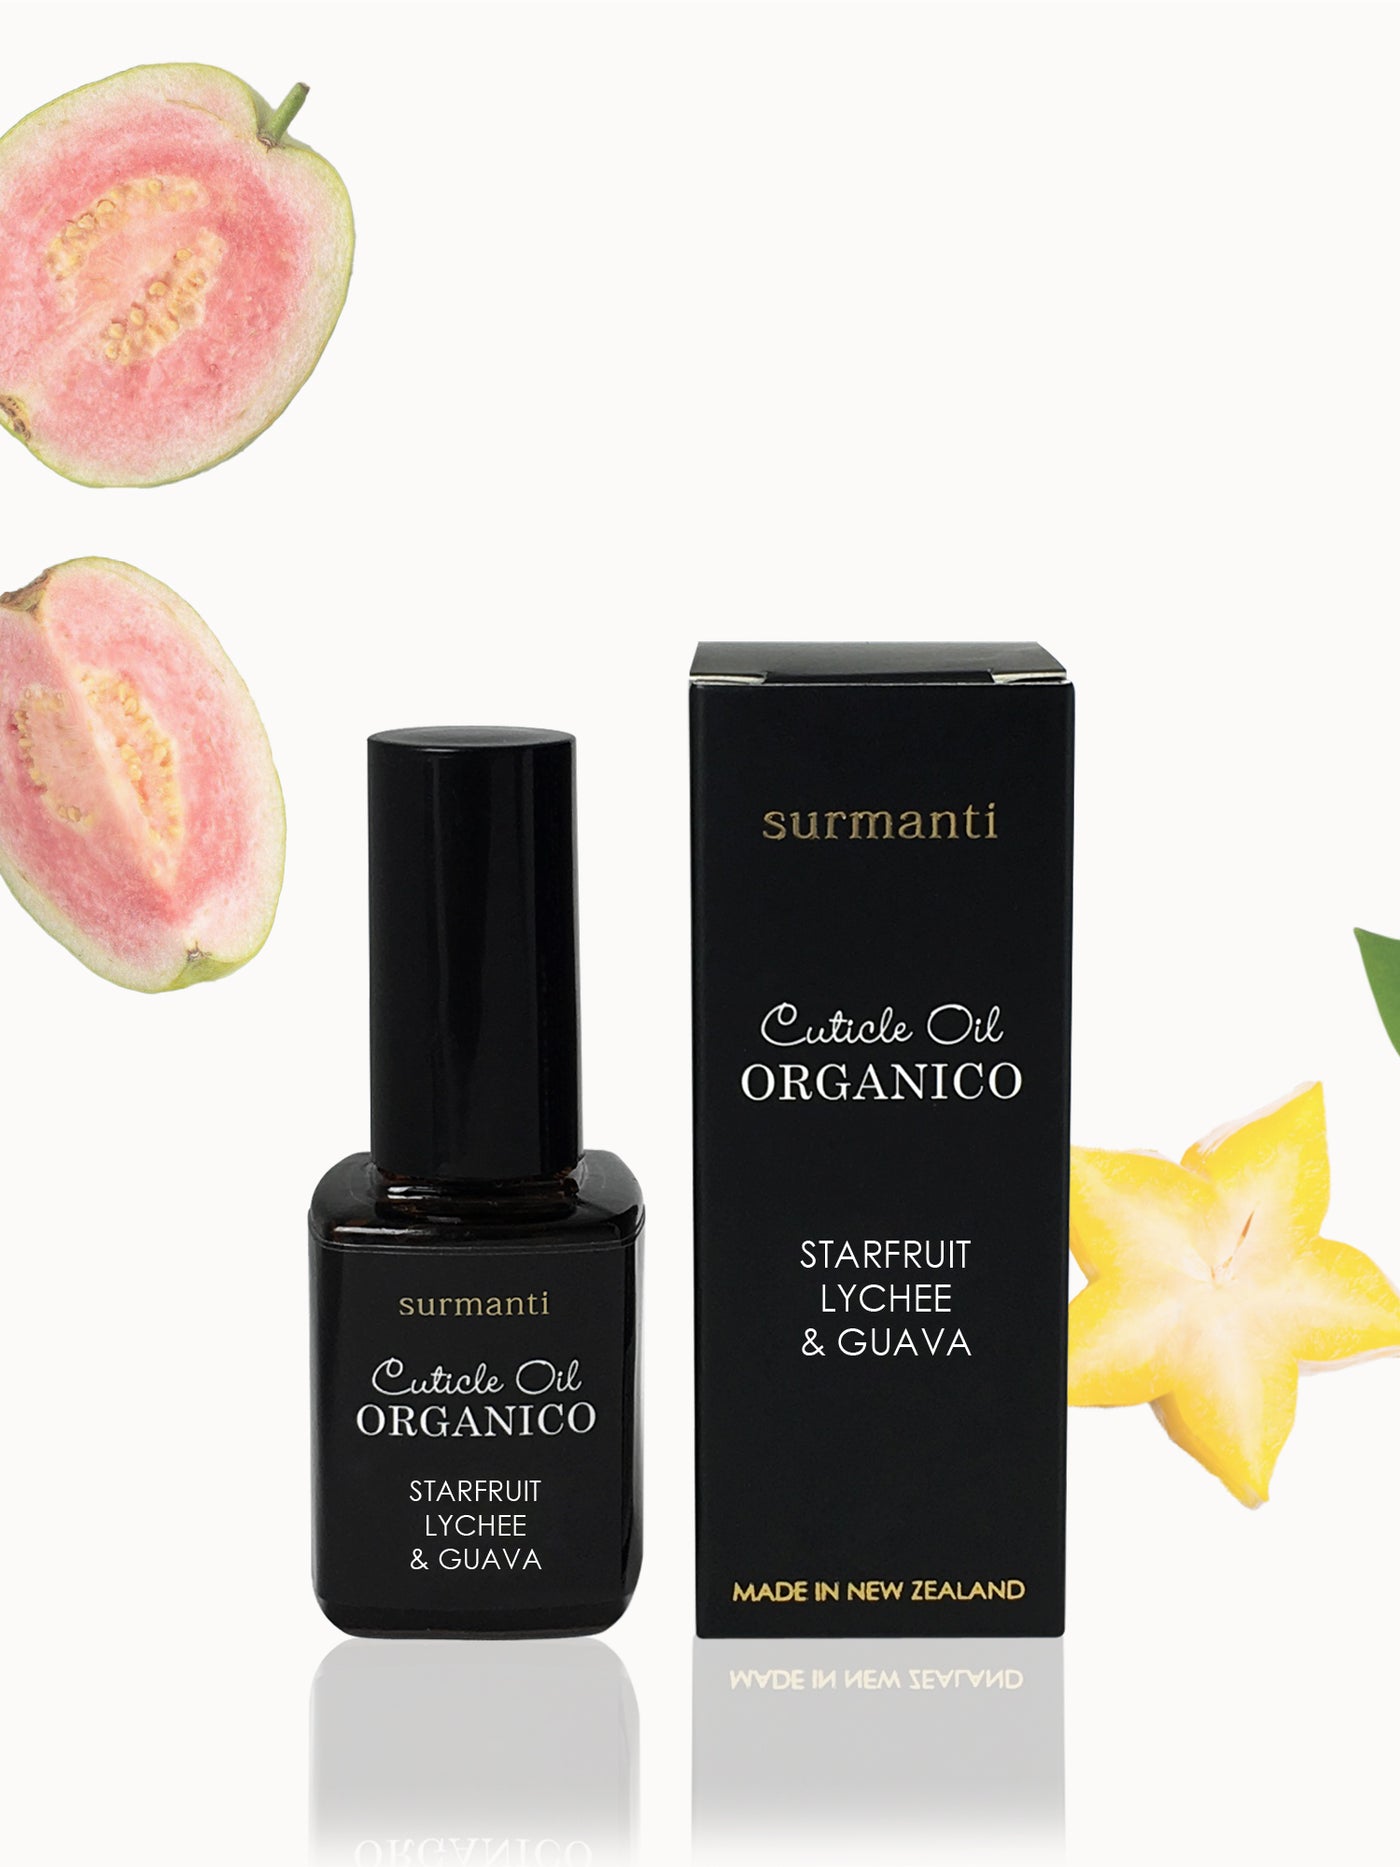 Starfruit Lychee & Guava Organico Cuticle Oil - Surmanti - Made In New Zealand